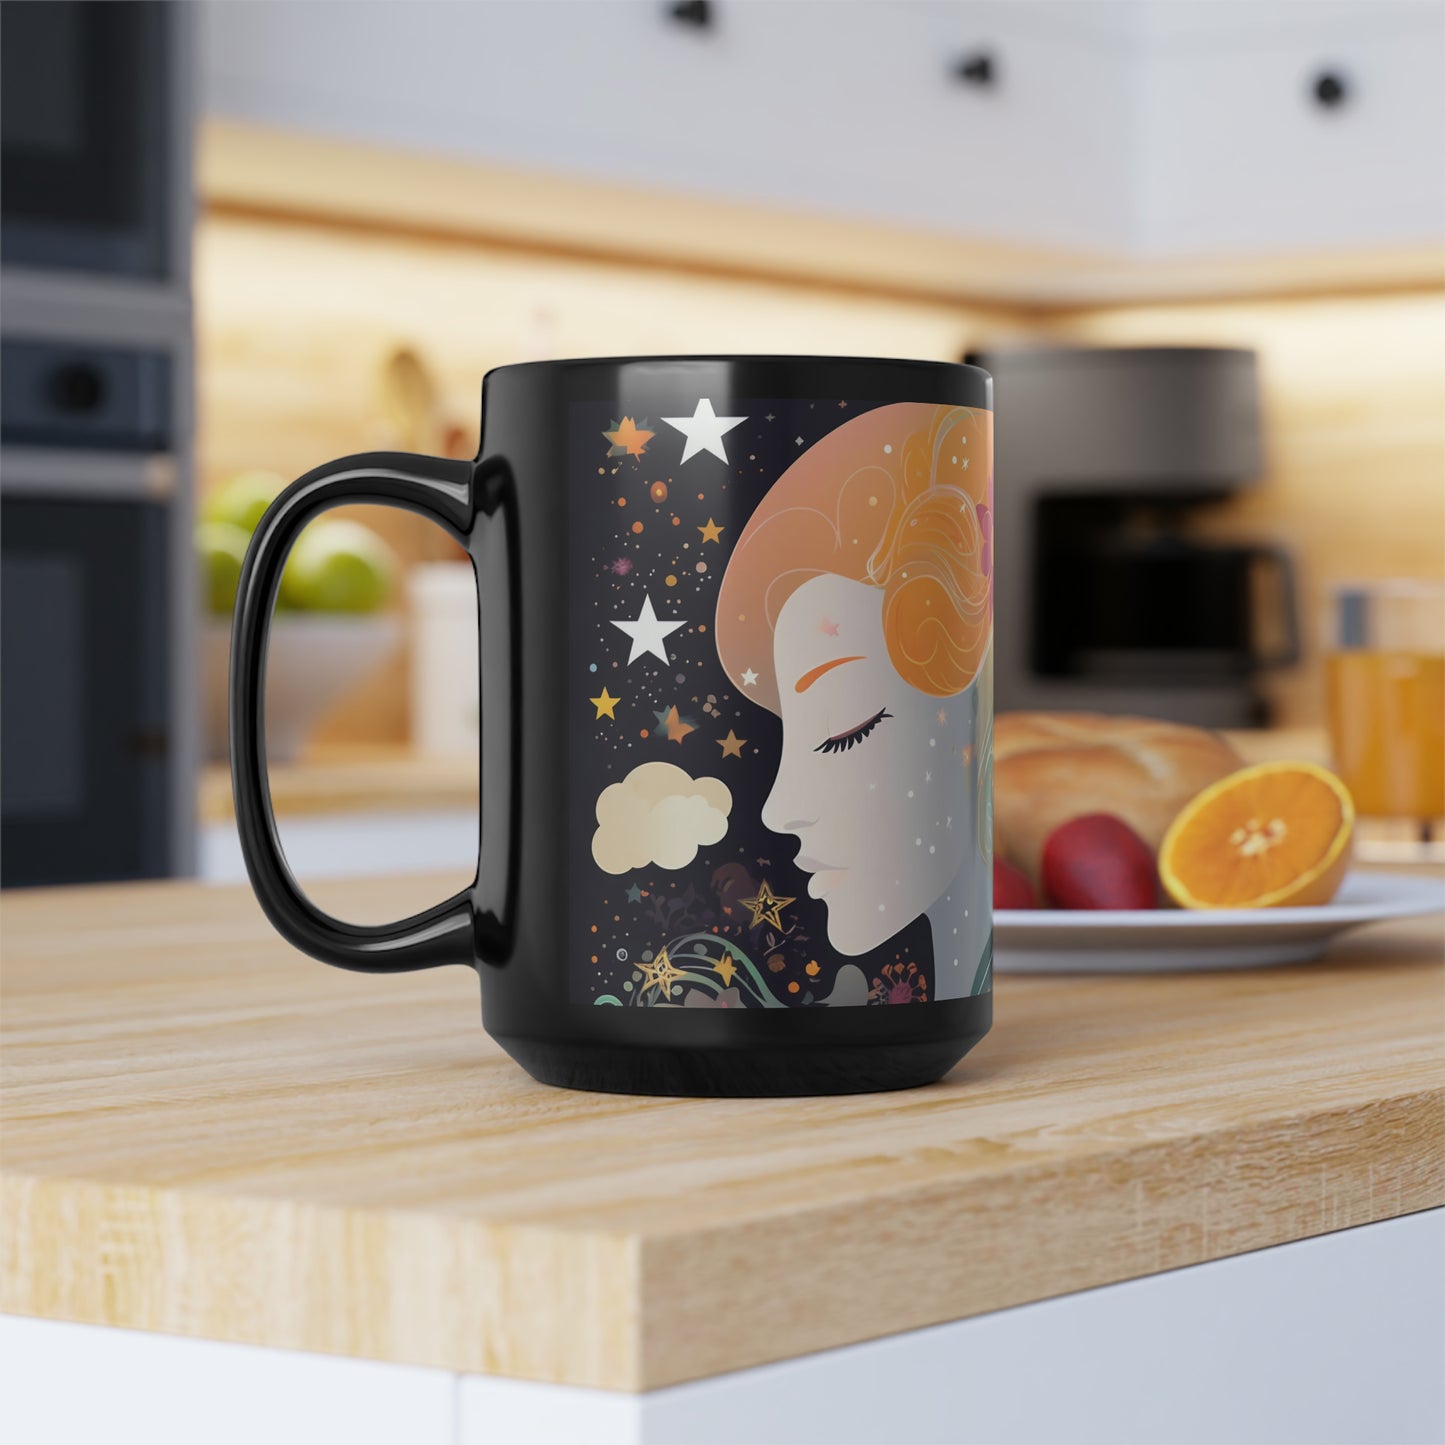 Sleepy Time Mug, Sleeping Lady with Stars and Flowers, Celestial Coffee Mug, Space Beauty Mug, Ceramic Mug 15oz